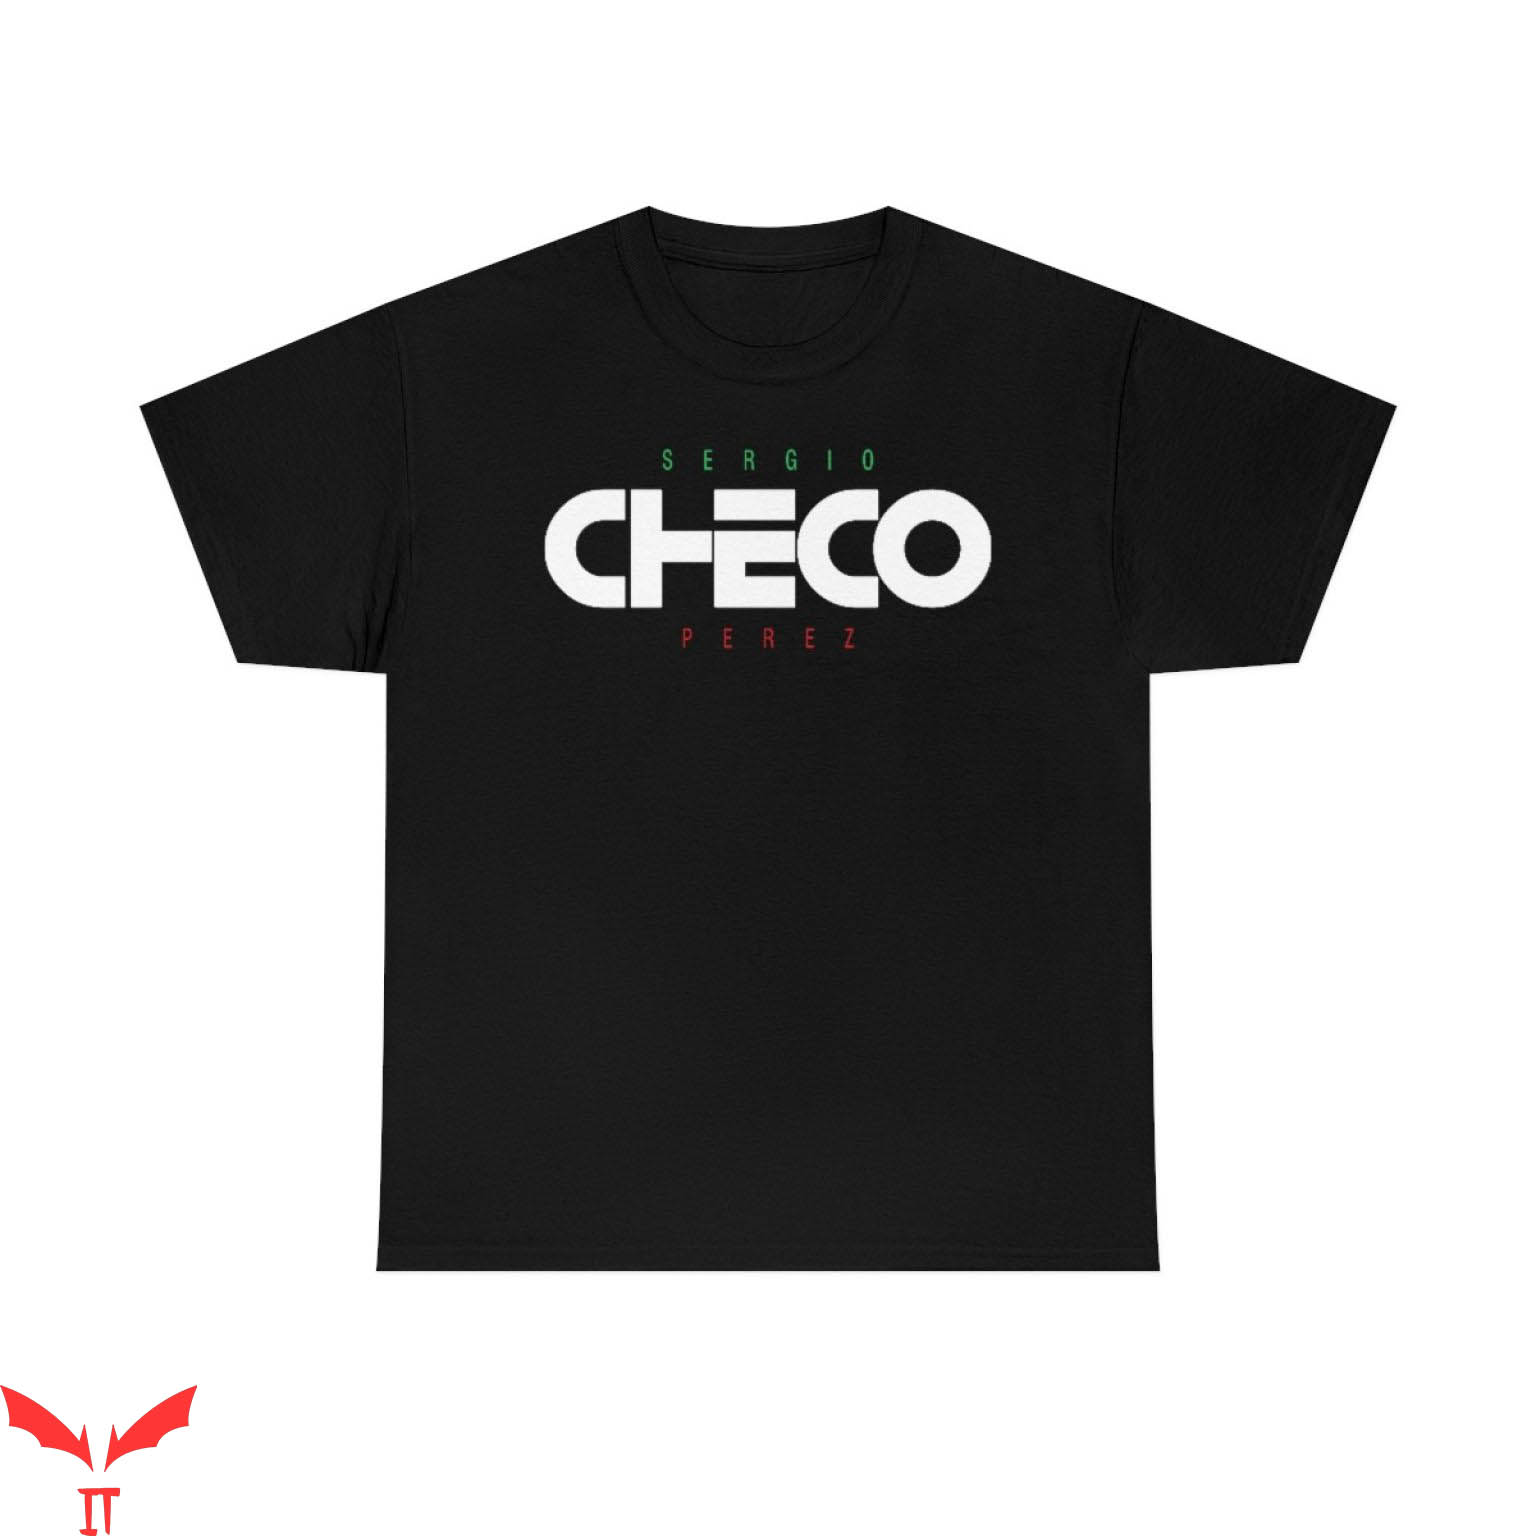 Checo Perez T-shirt Sergio Checo Perez T-shirt